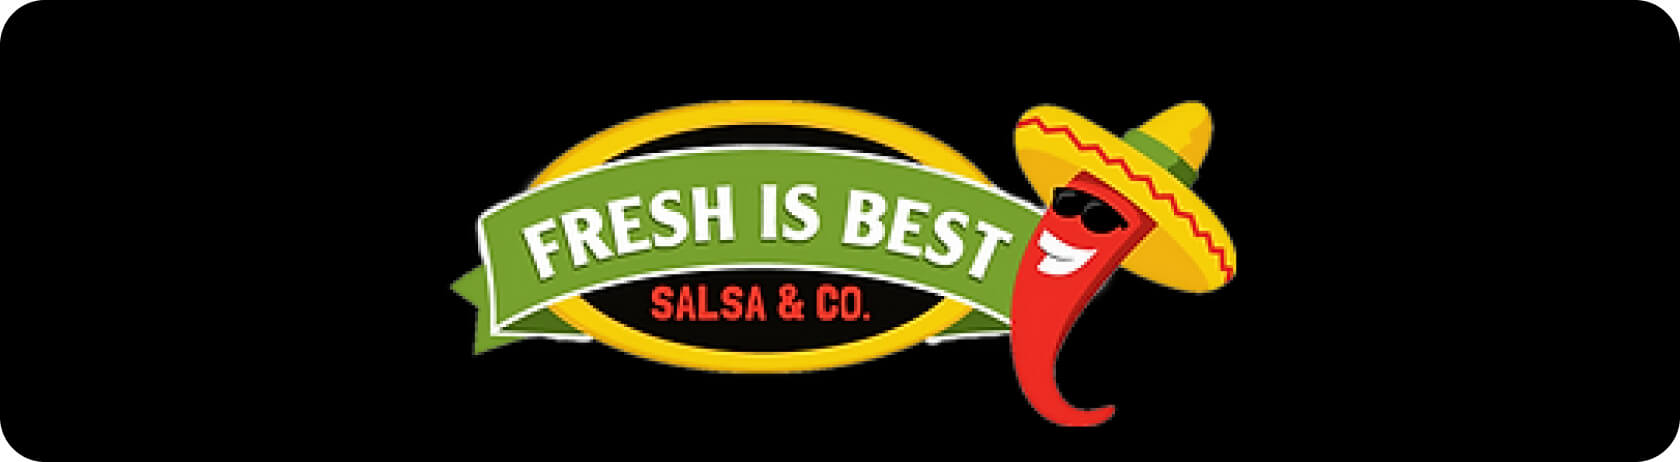 Fresh Is Best Salsa & Co. logo with black baground